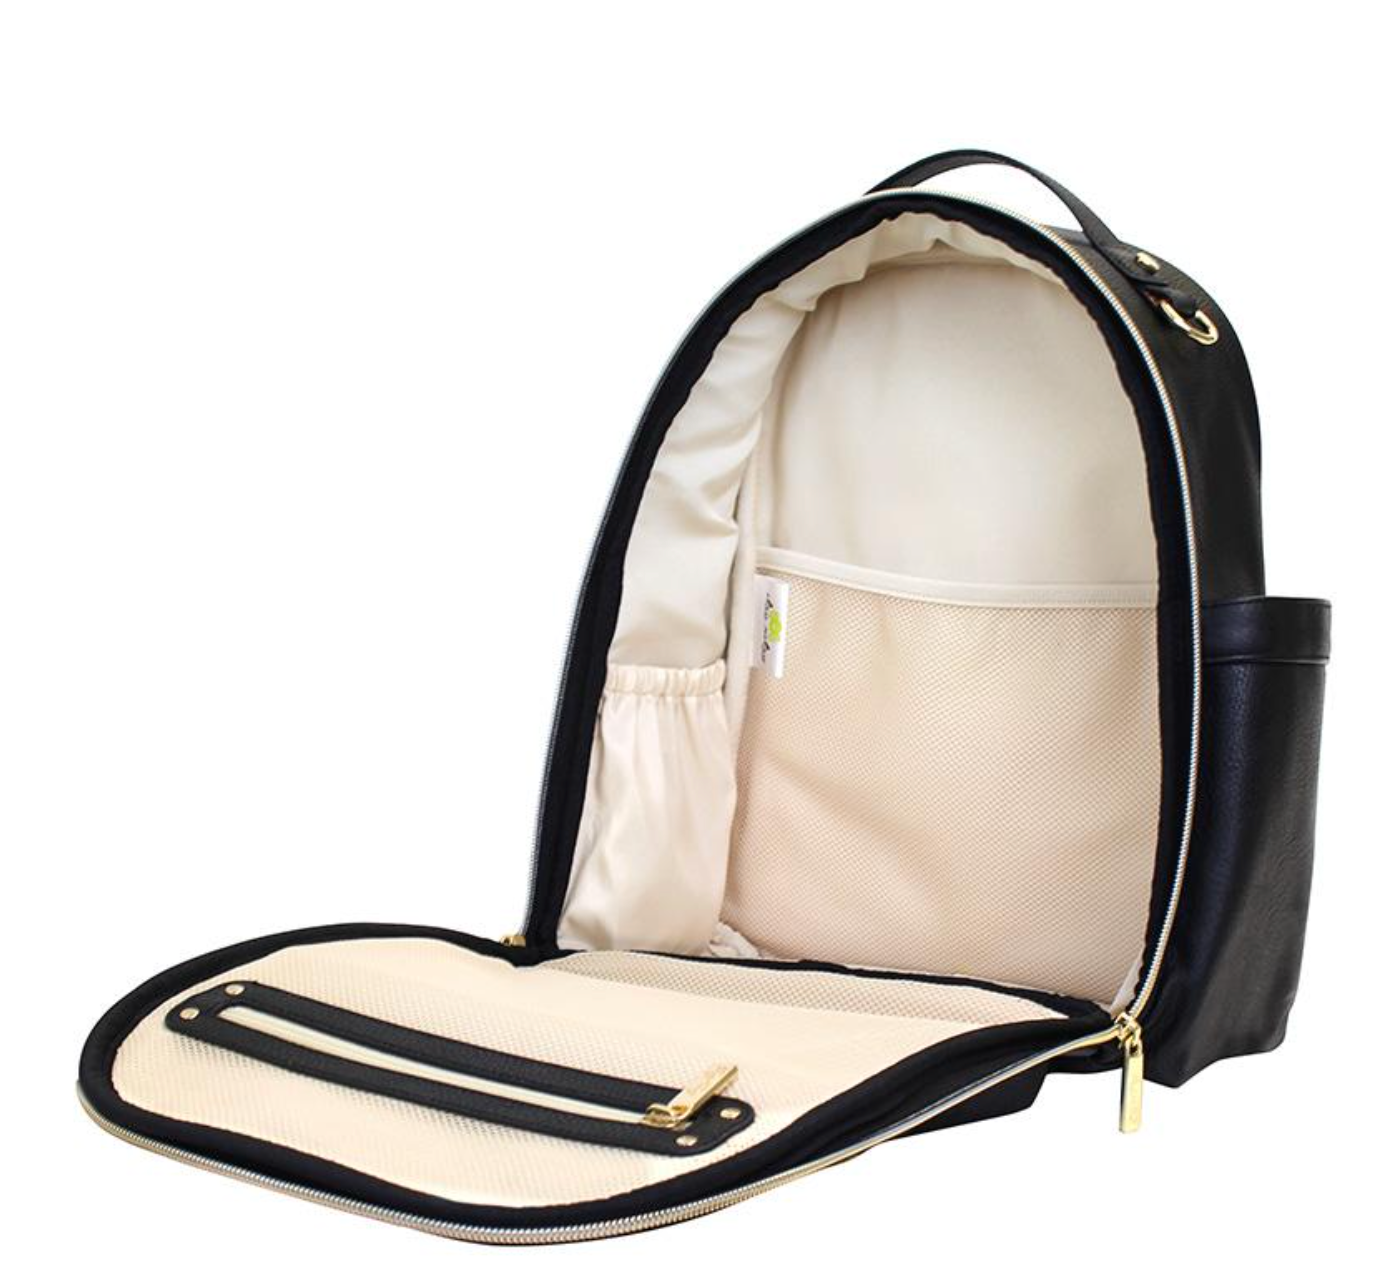 Black Itzy Mini Diaper Bag Backpack